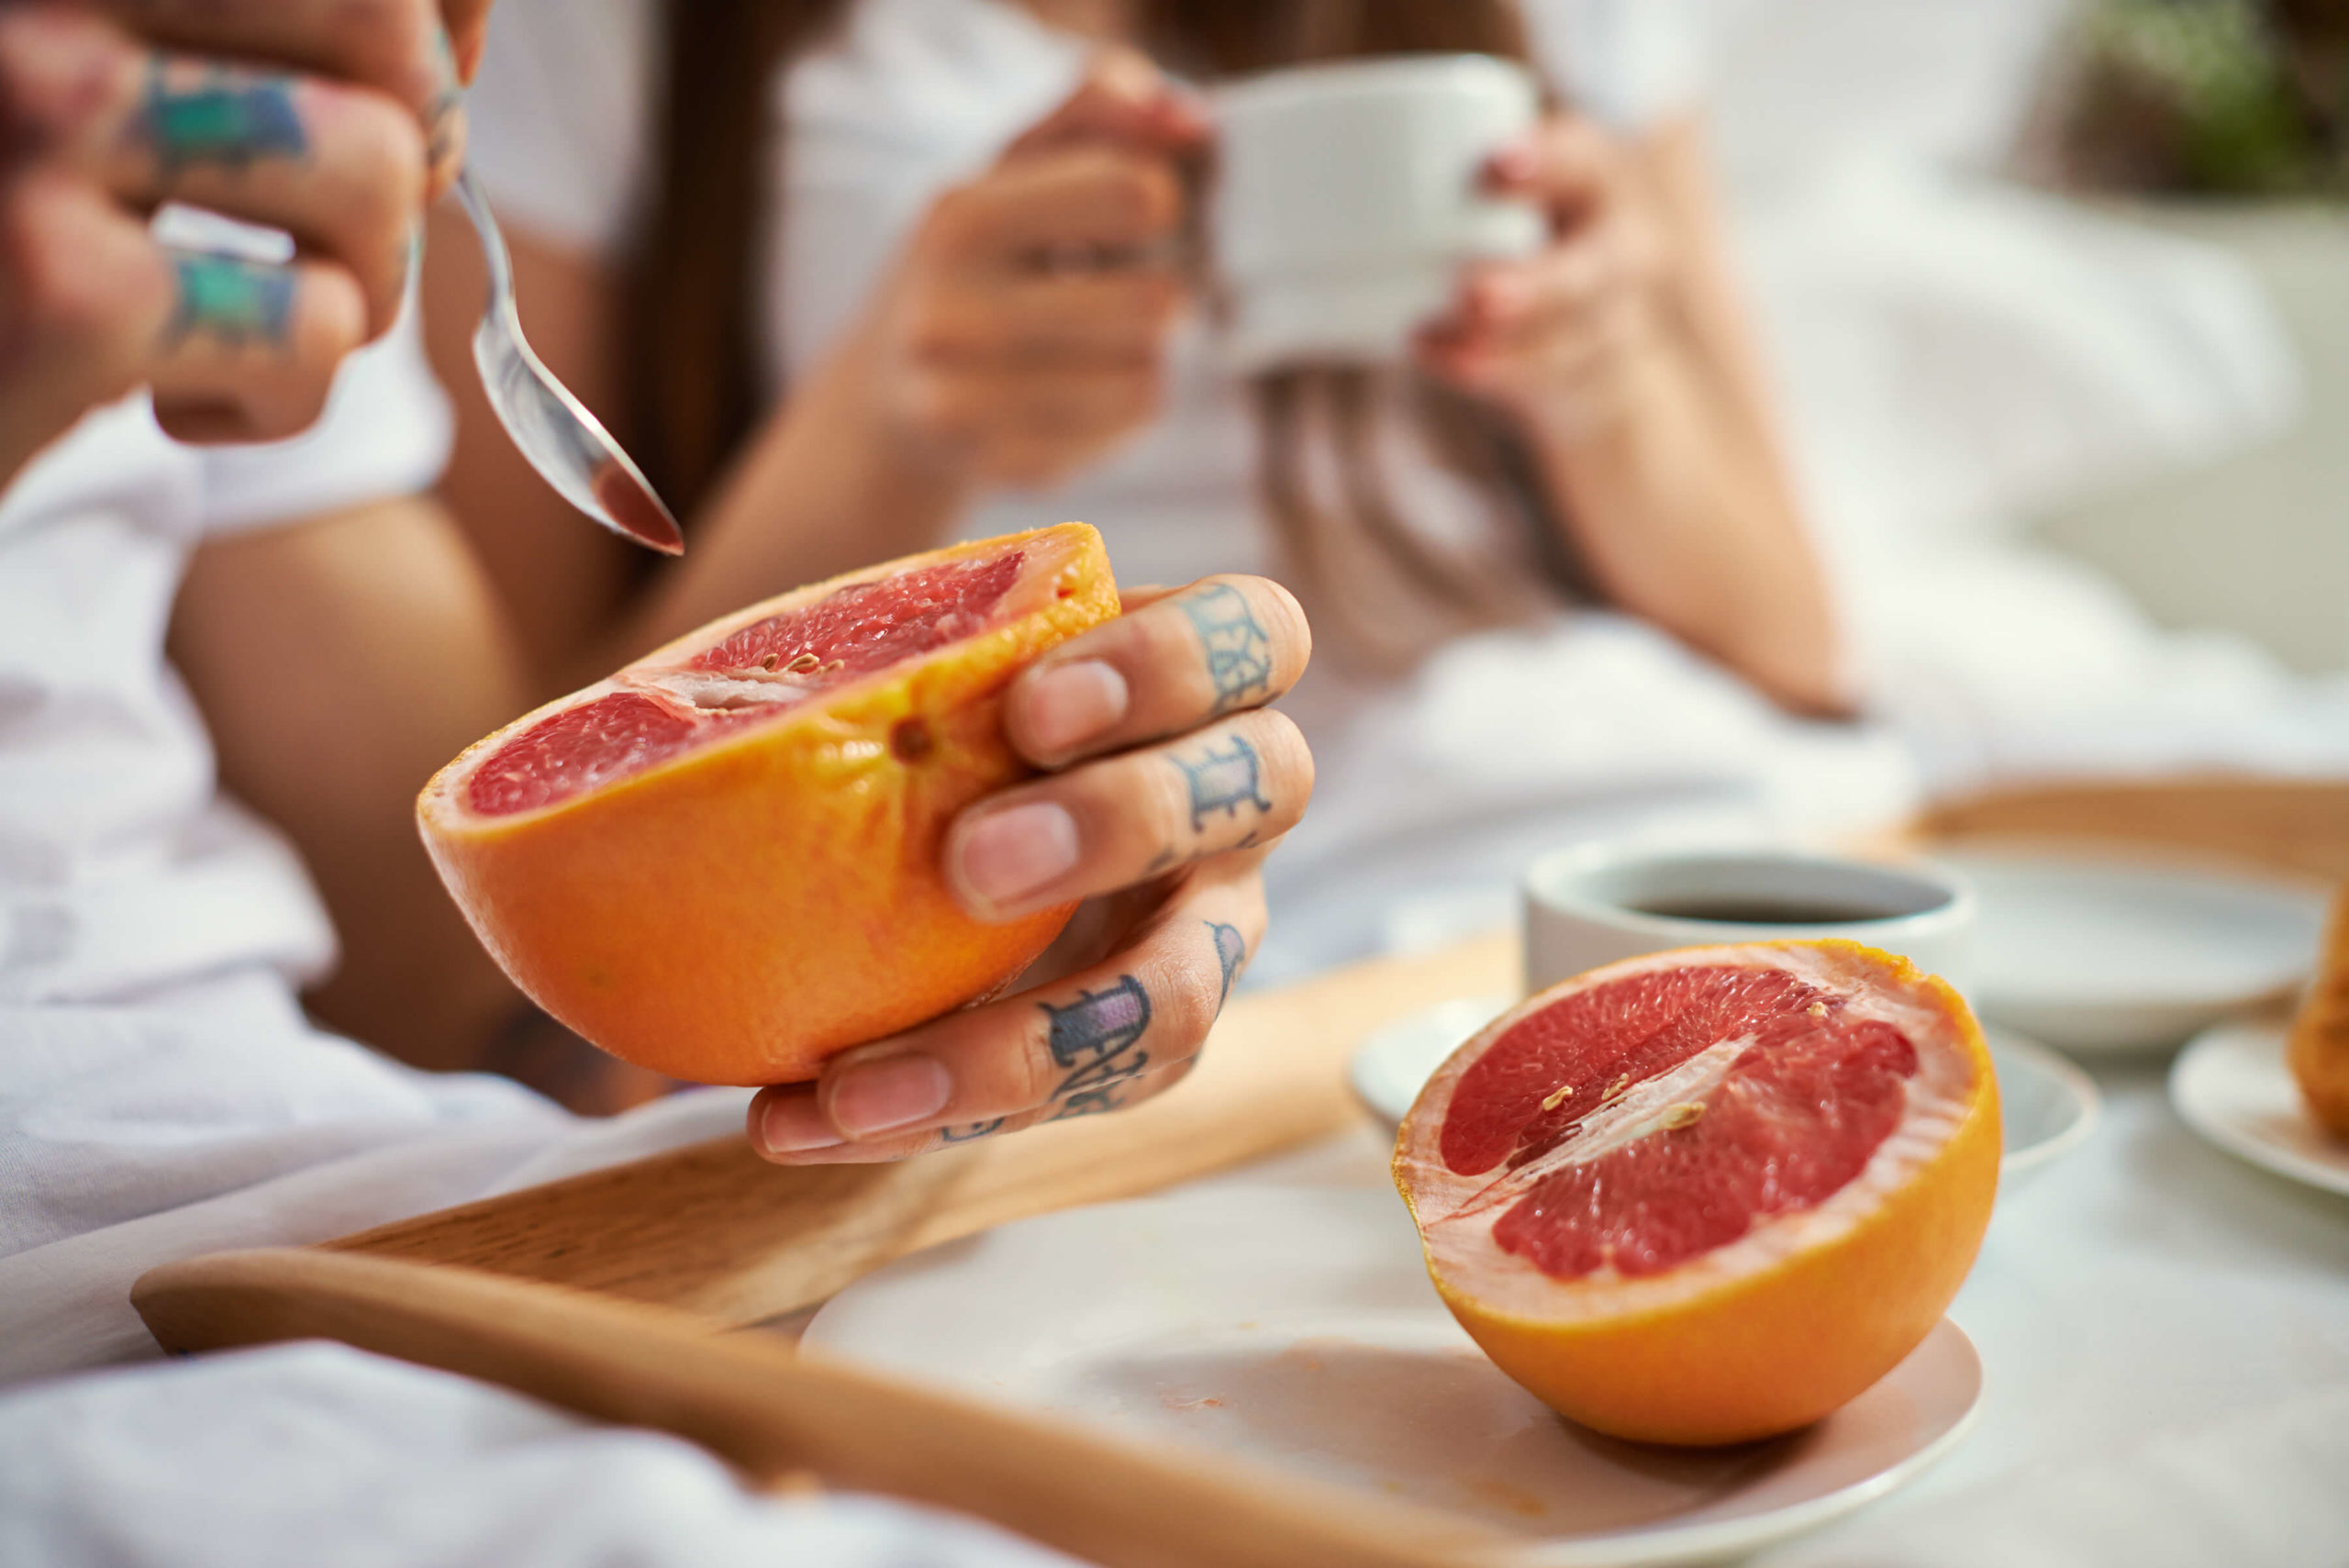 Couple having healthy breakfast in bed, man eating grapefruit